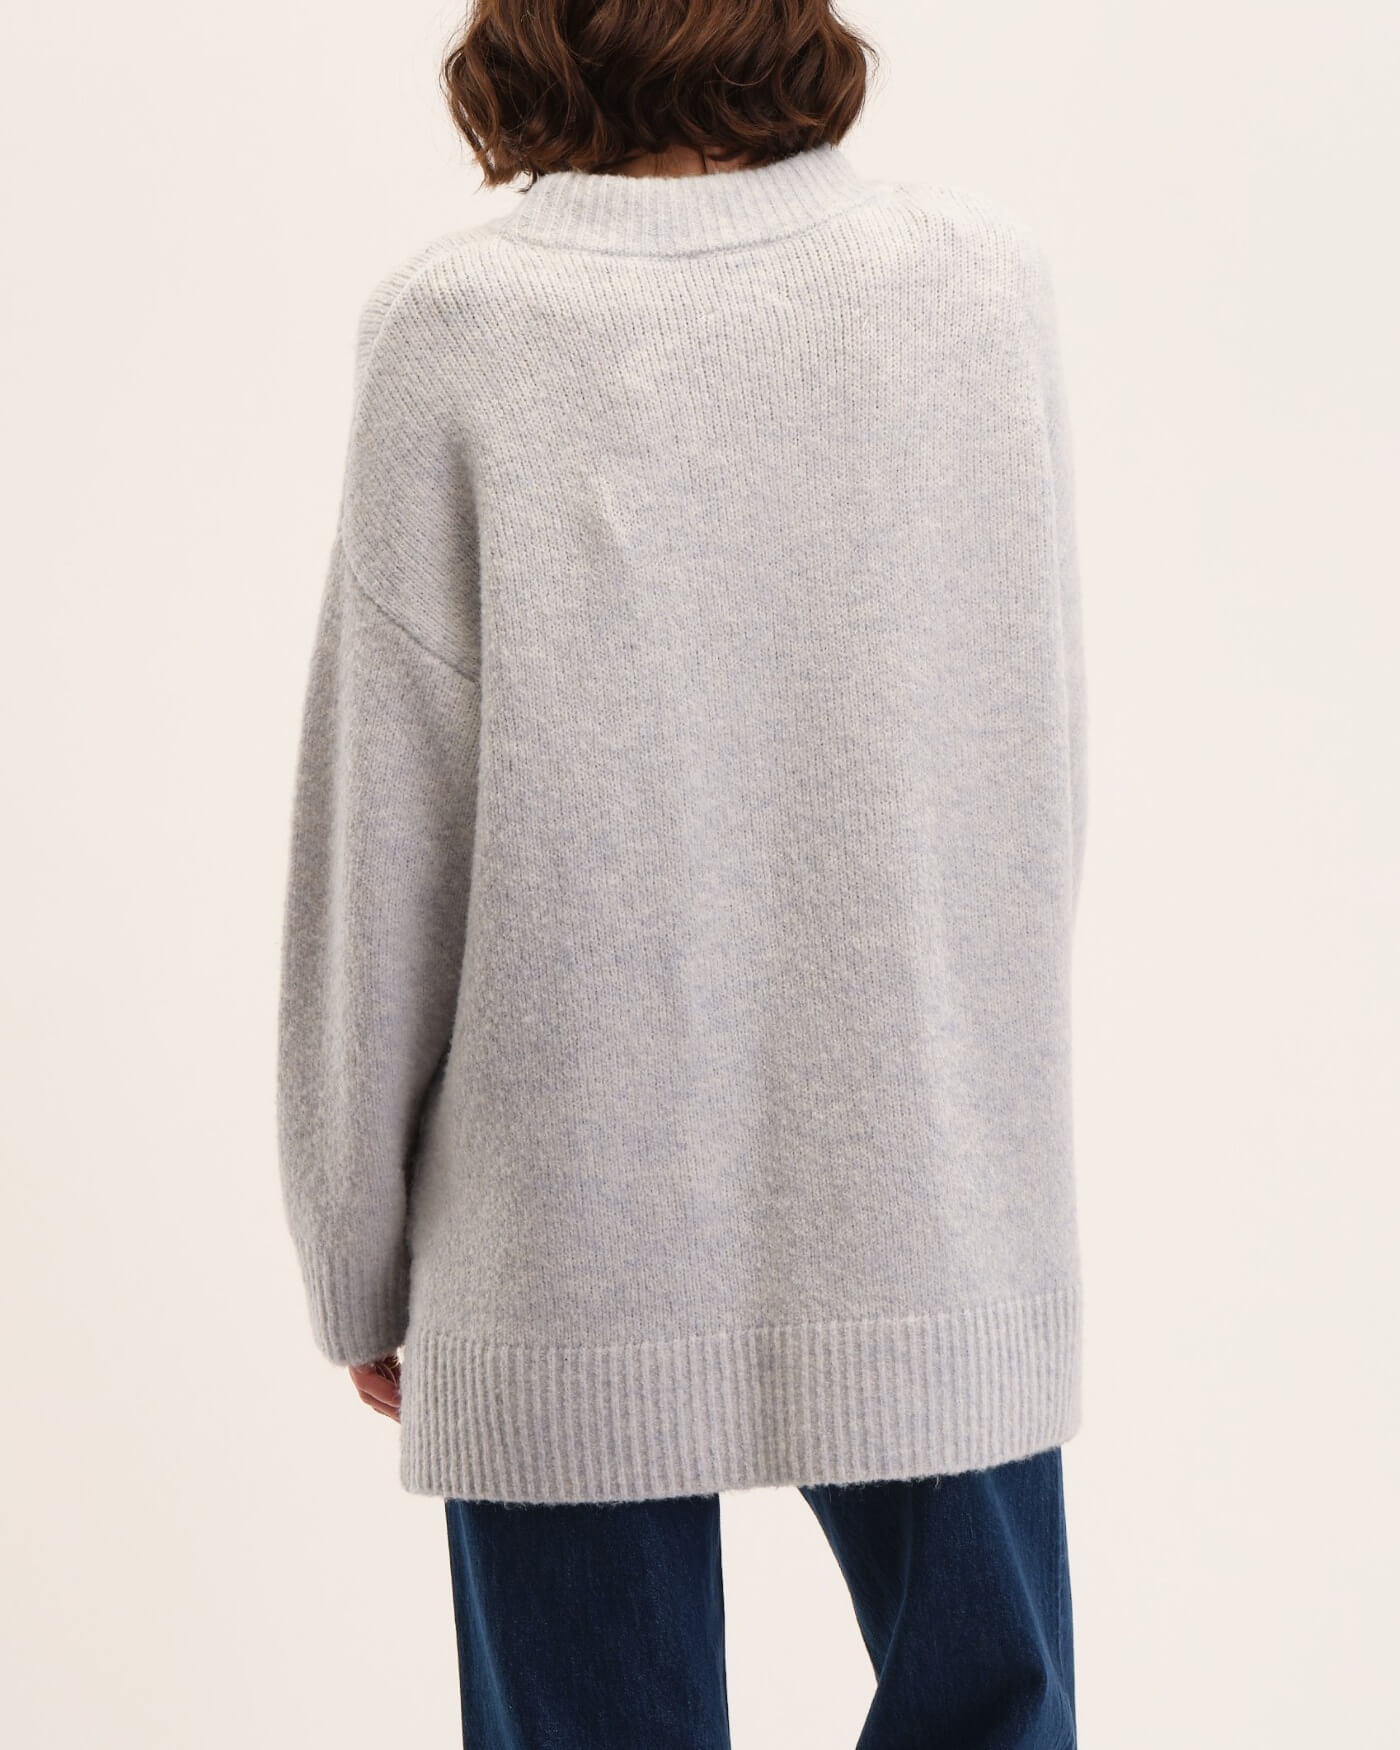 Shop Crew Neck Jersey Pullover Sweater | Elie Elie Tahari | JANE + MERCER